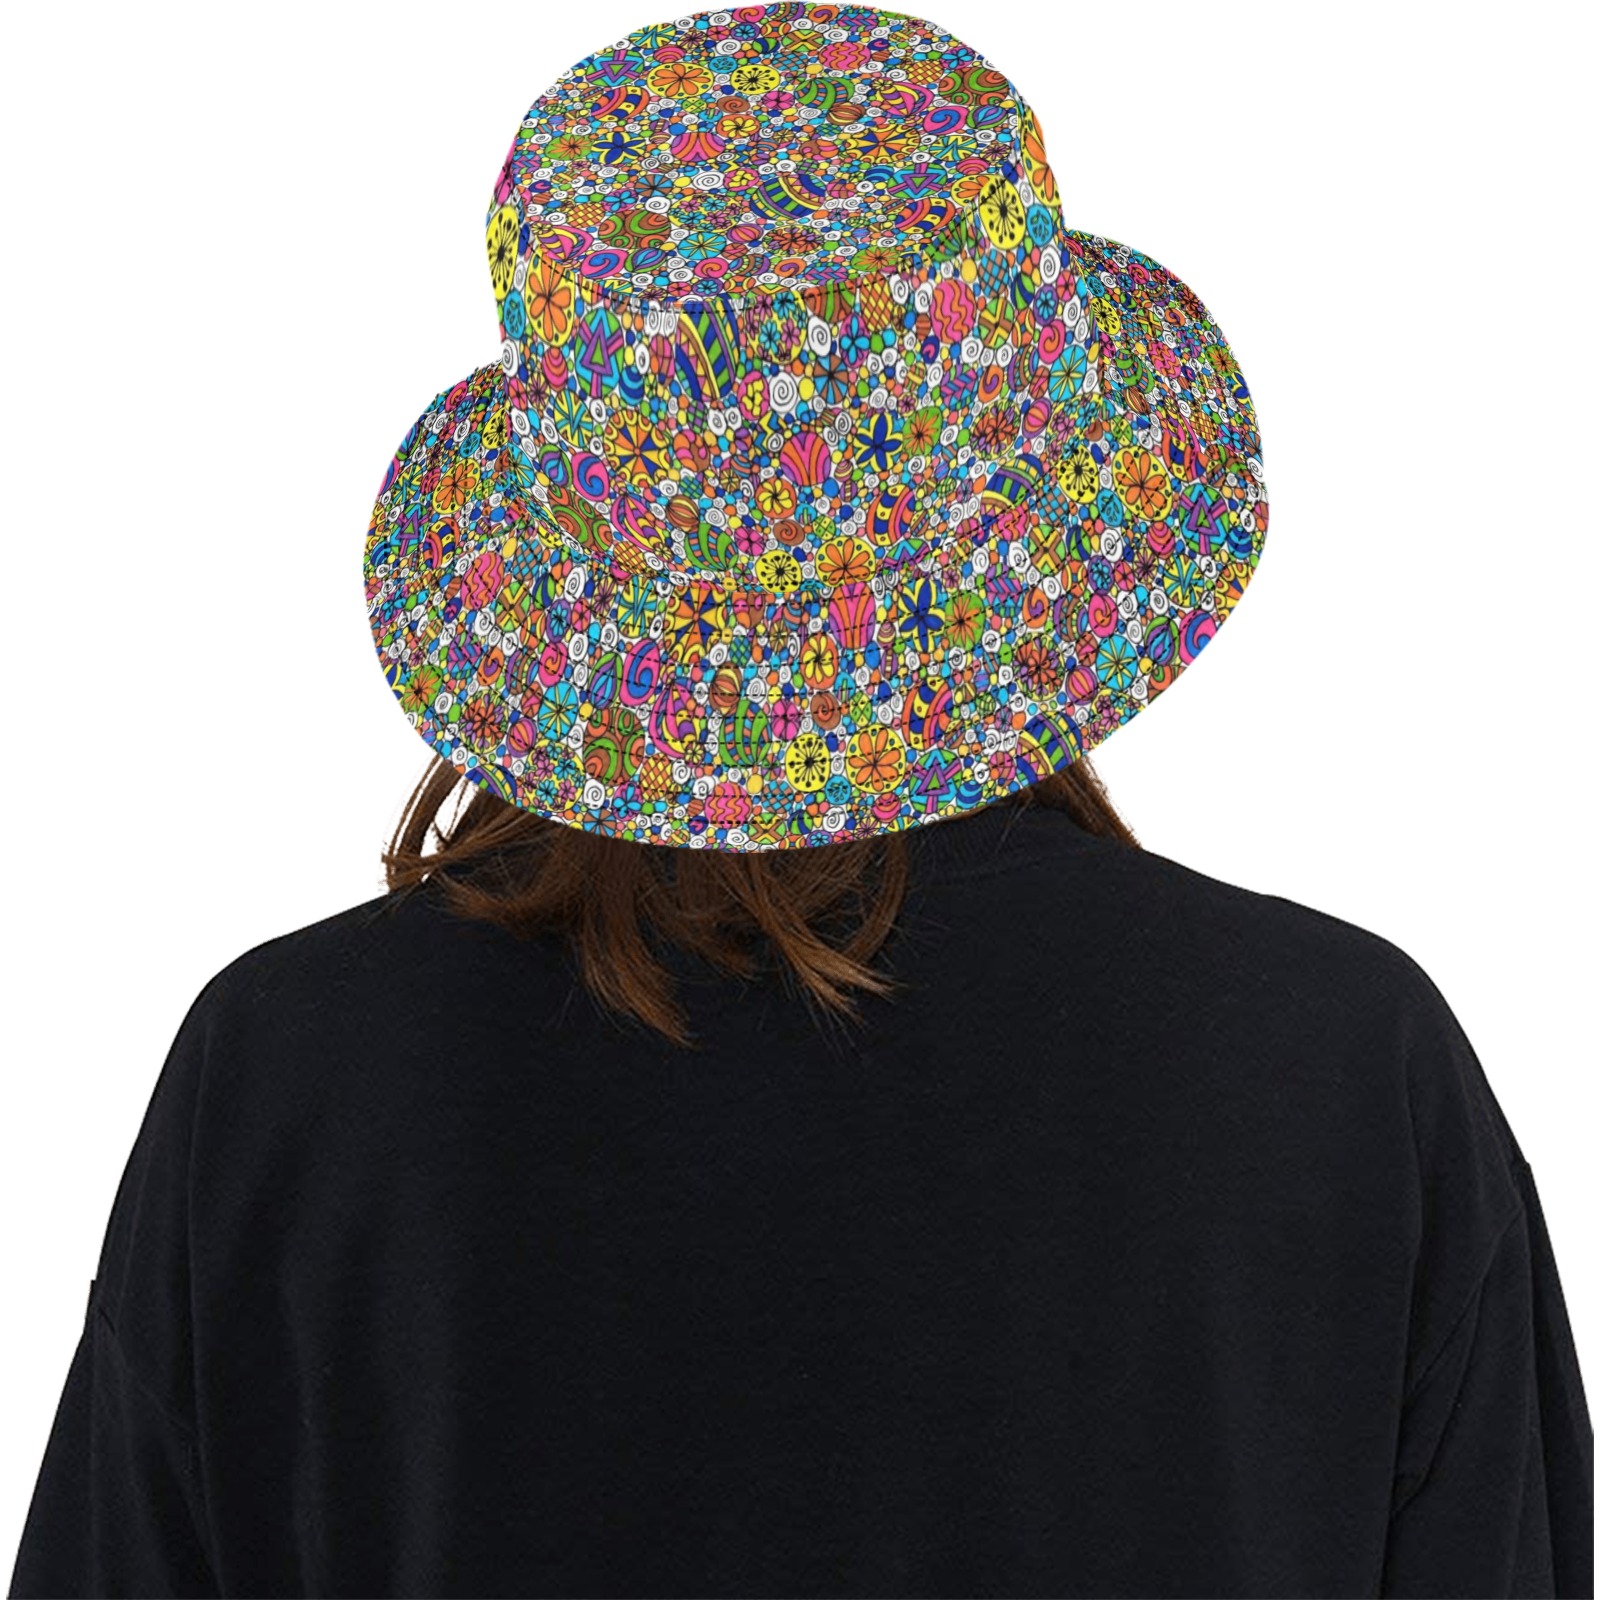 Cosmic Explosion Unisex Summer Bucket Hat